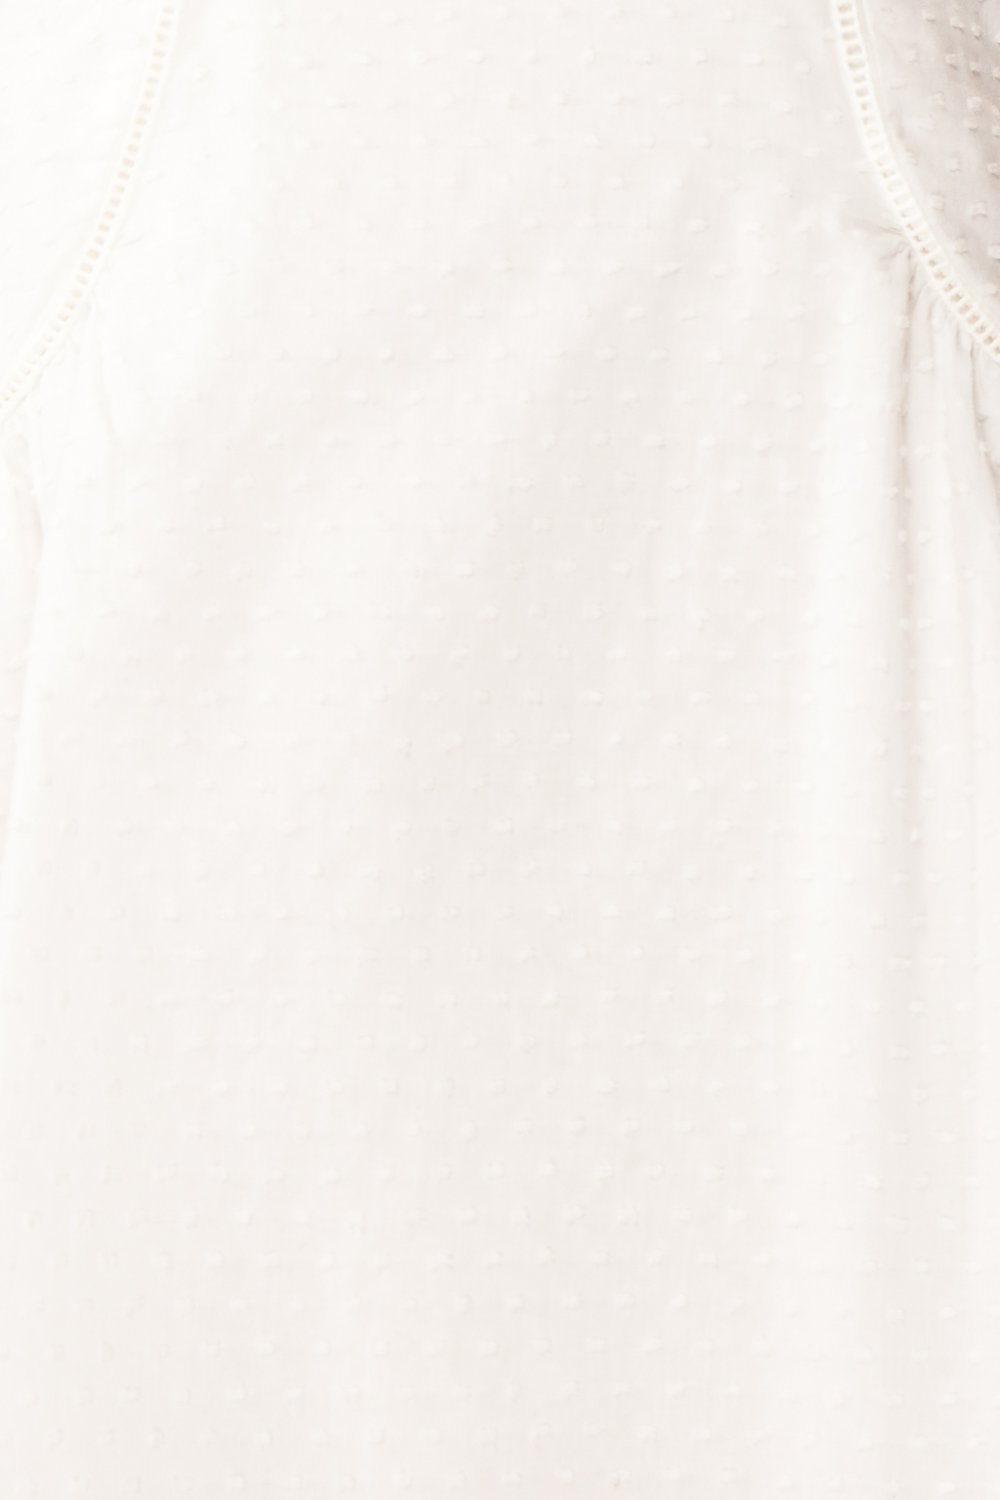 Torborg White Plumetis A-Line Dress fabric | Boutique 1861